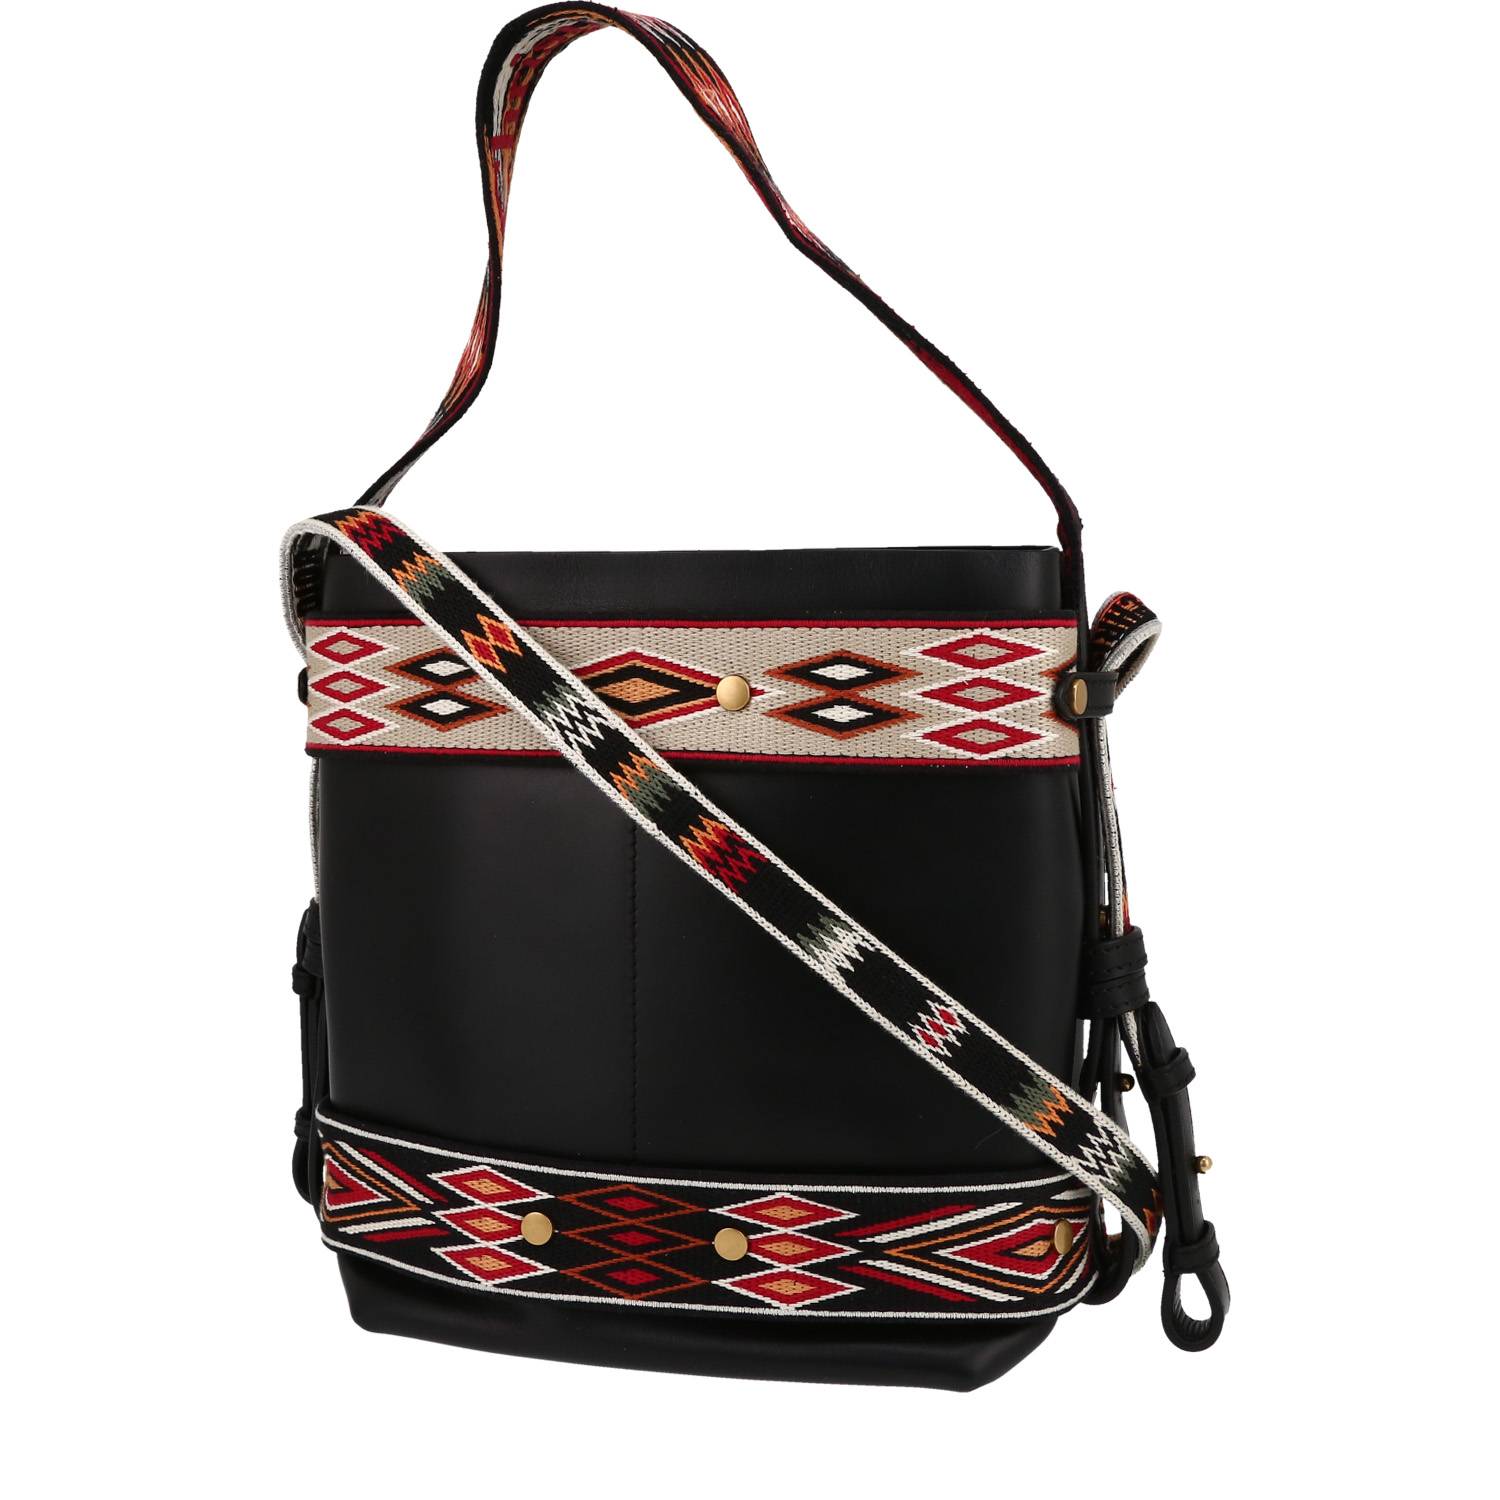 00pp dior handbag in black leather and multicolor canvas